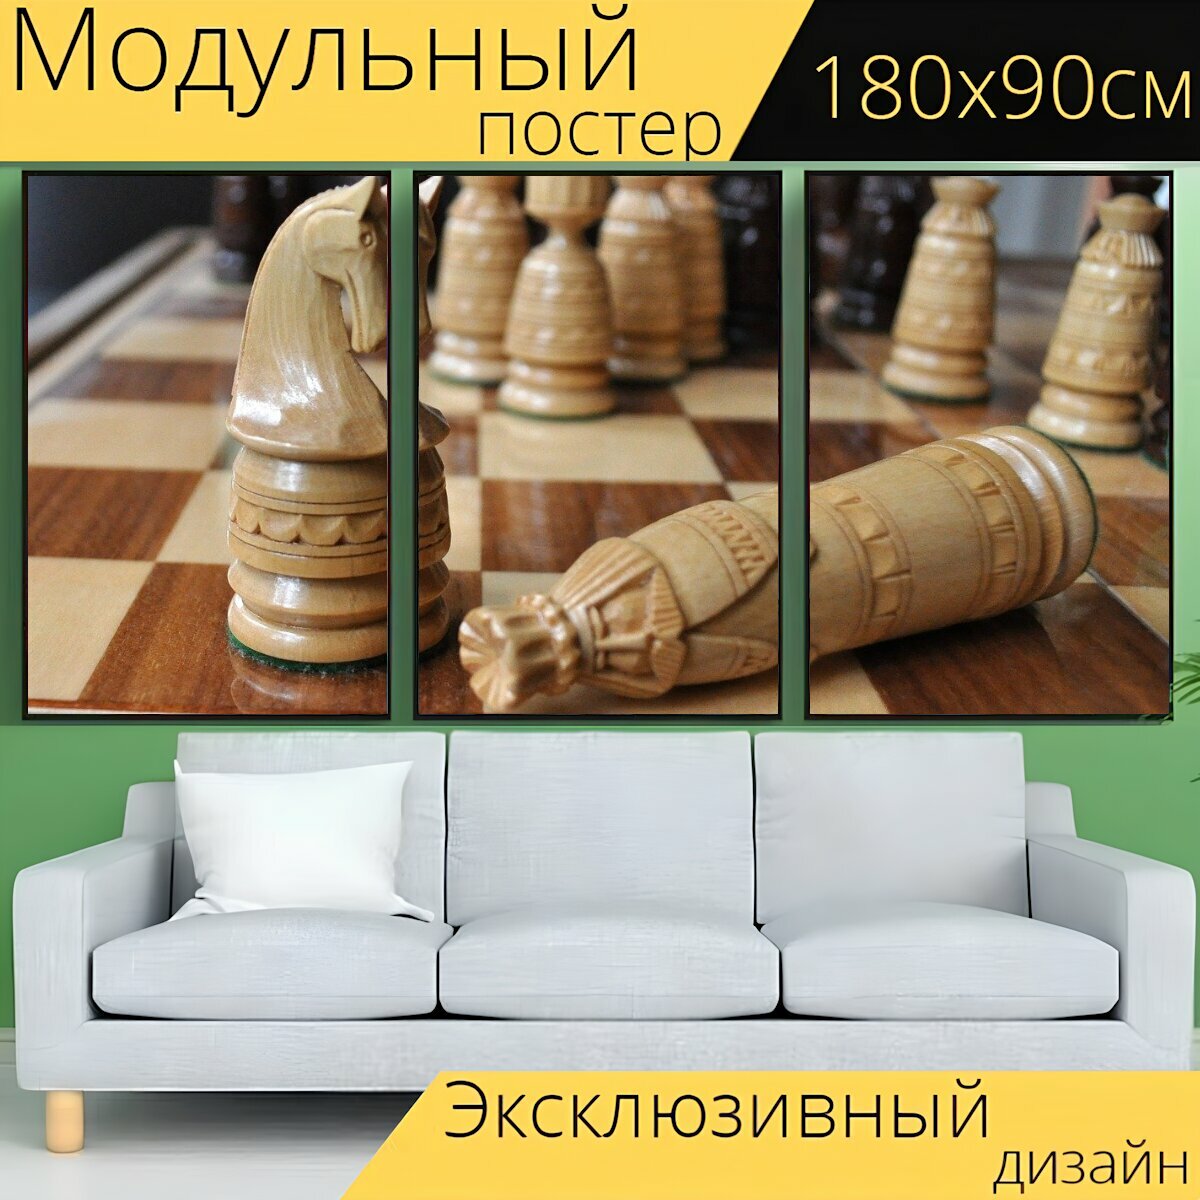 Модульный постер "Шахматы, король, рыцарь" 180 x 90 см. для интерьера